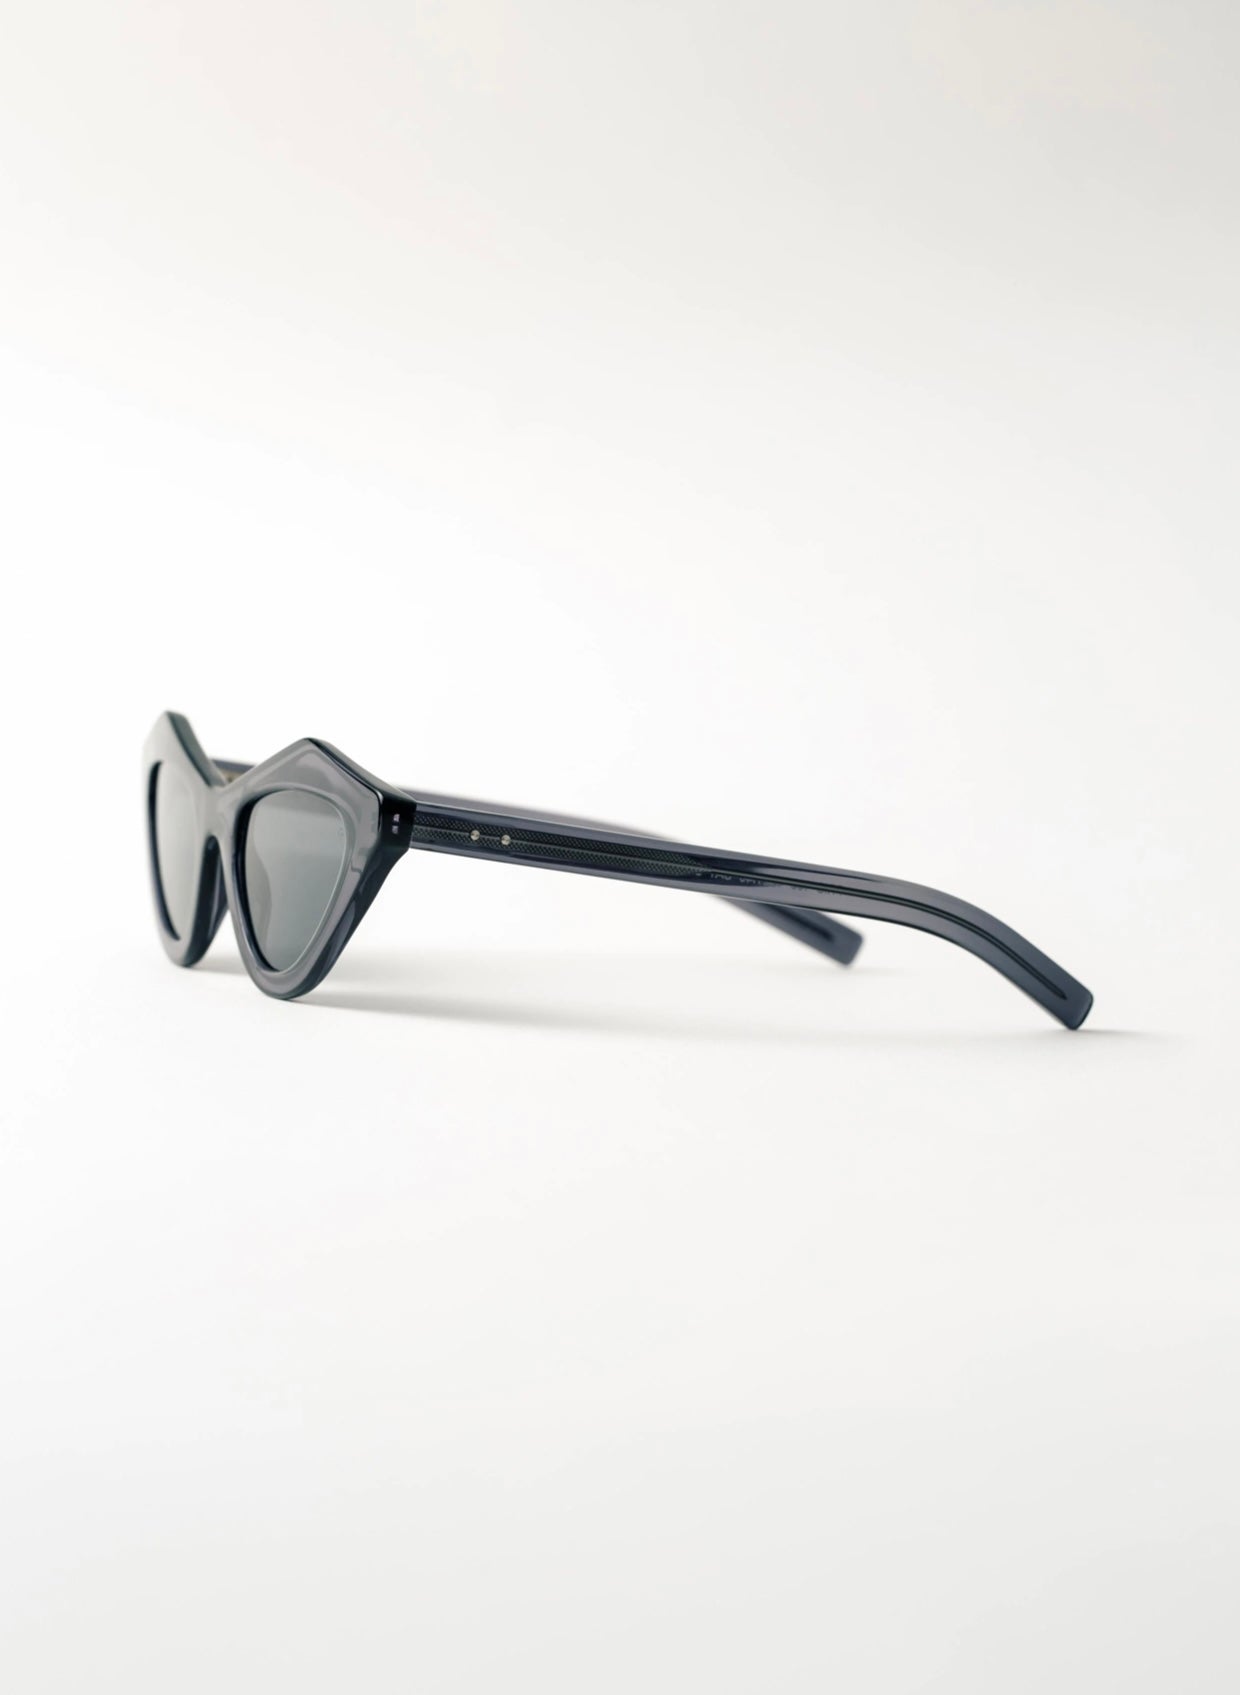 Oscar Magnuson - Sunglasses Pris Crystal Grey